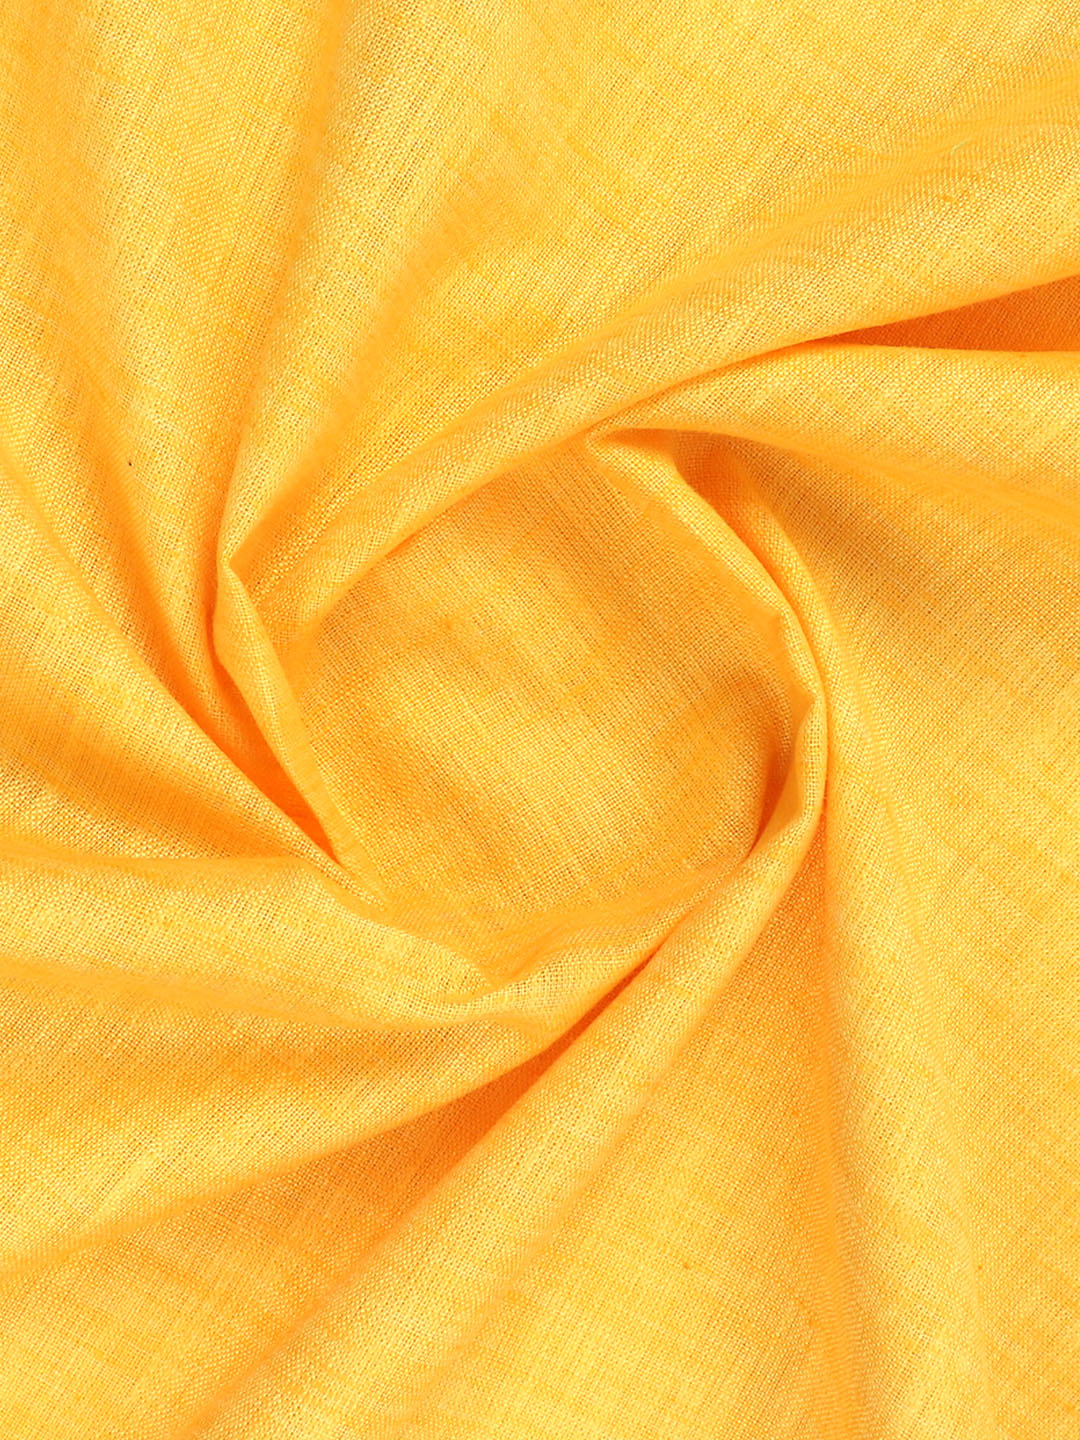 Cotton Blend Yellow Colour Kurtha Fabric Lampus - APC1106-8